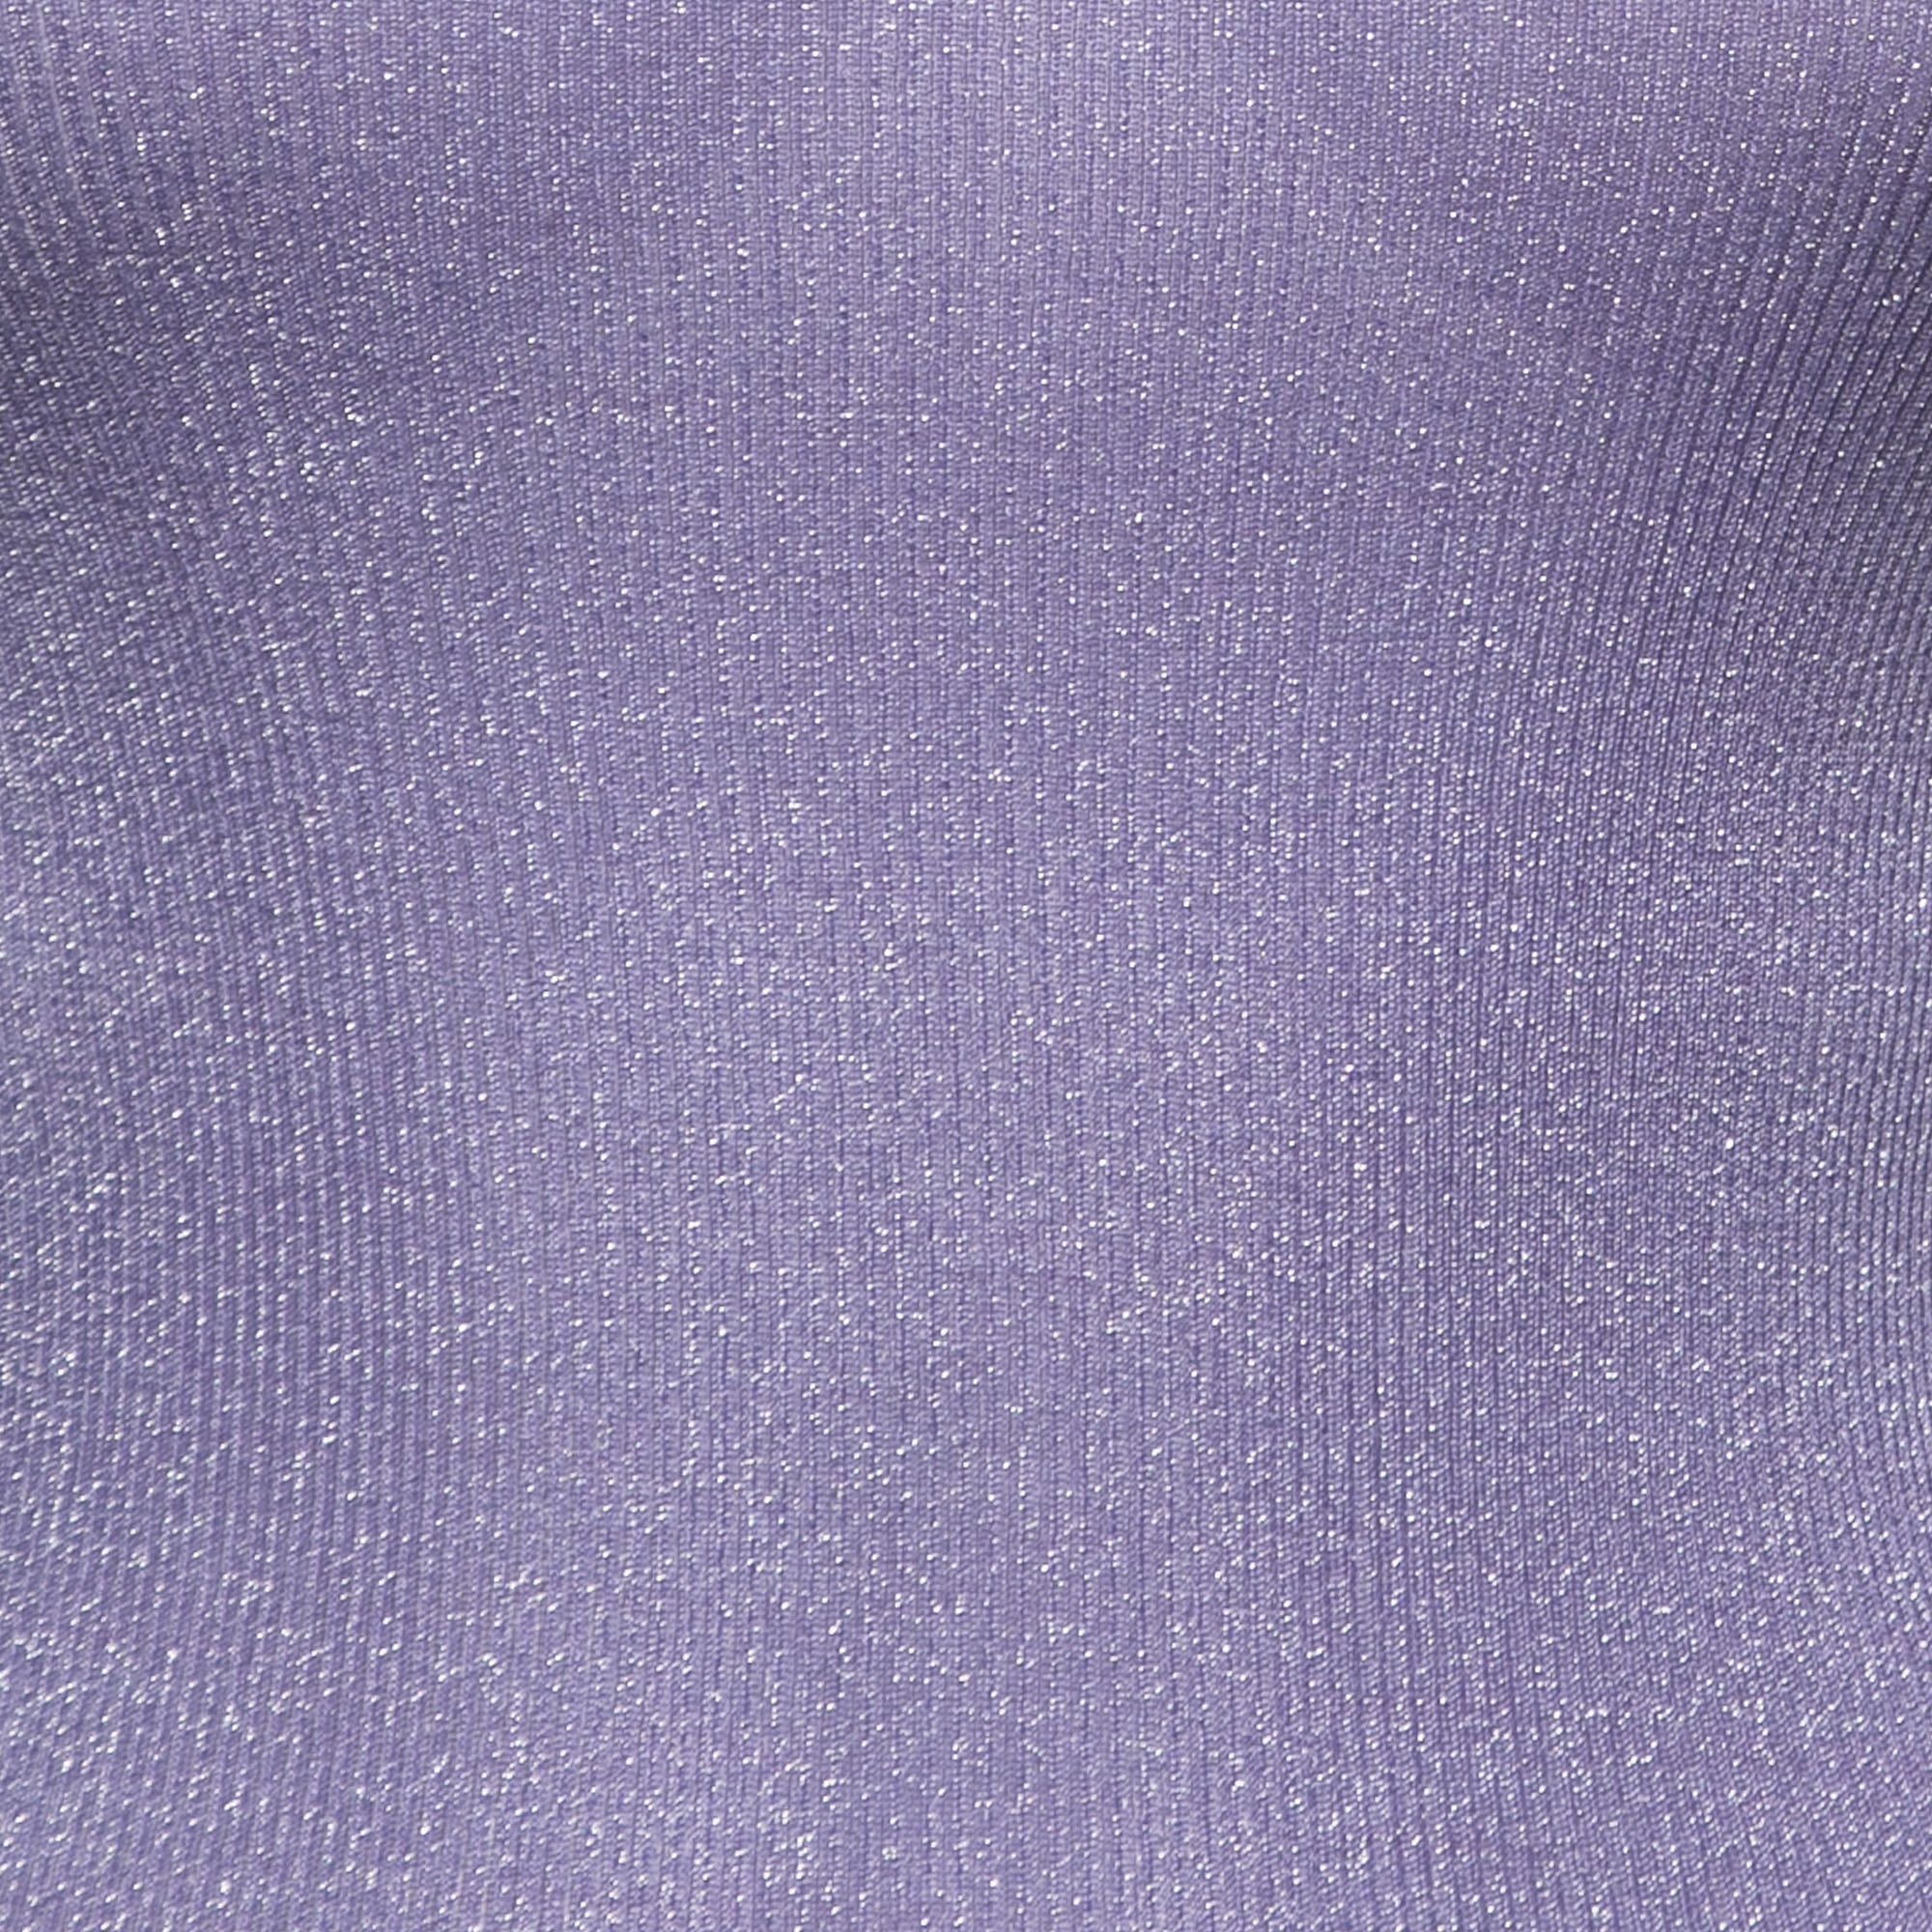 Missoni Purple Lurex Knit High Neck Sleeves Top M